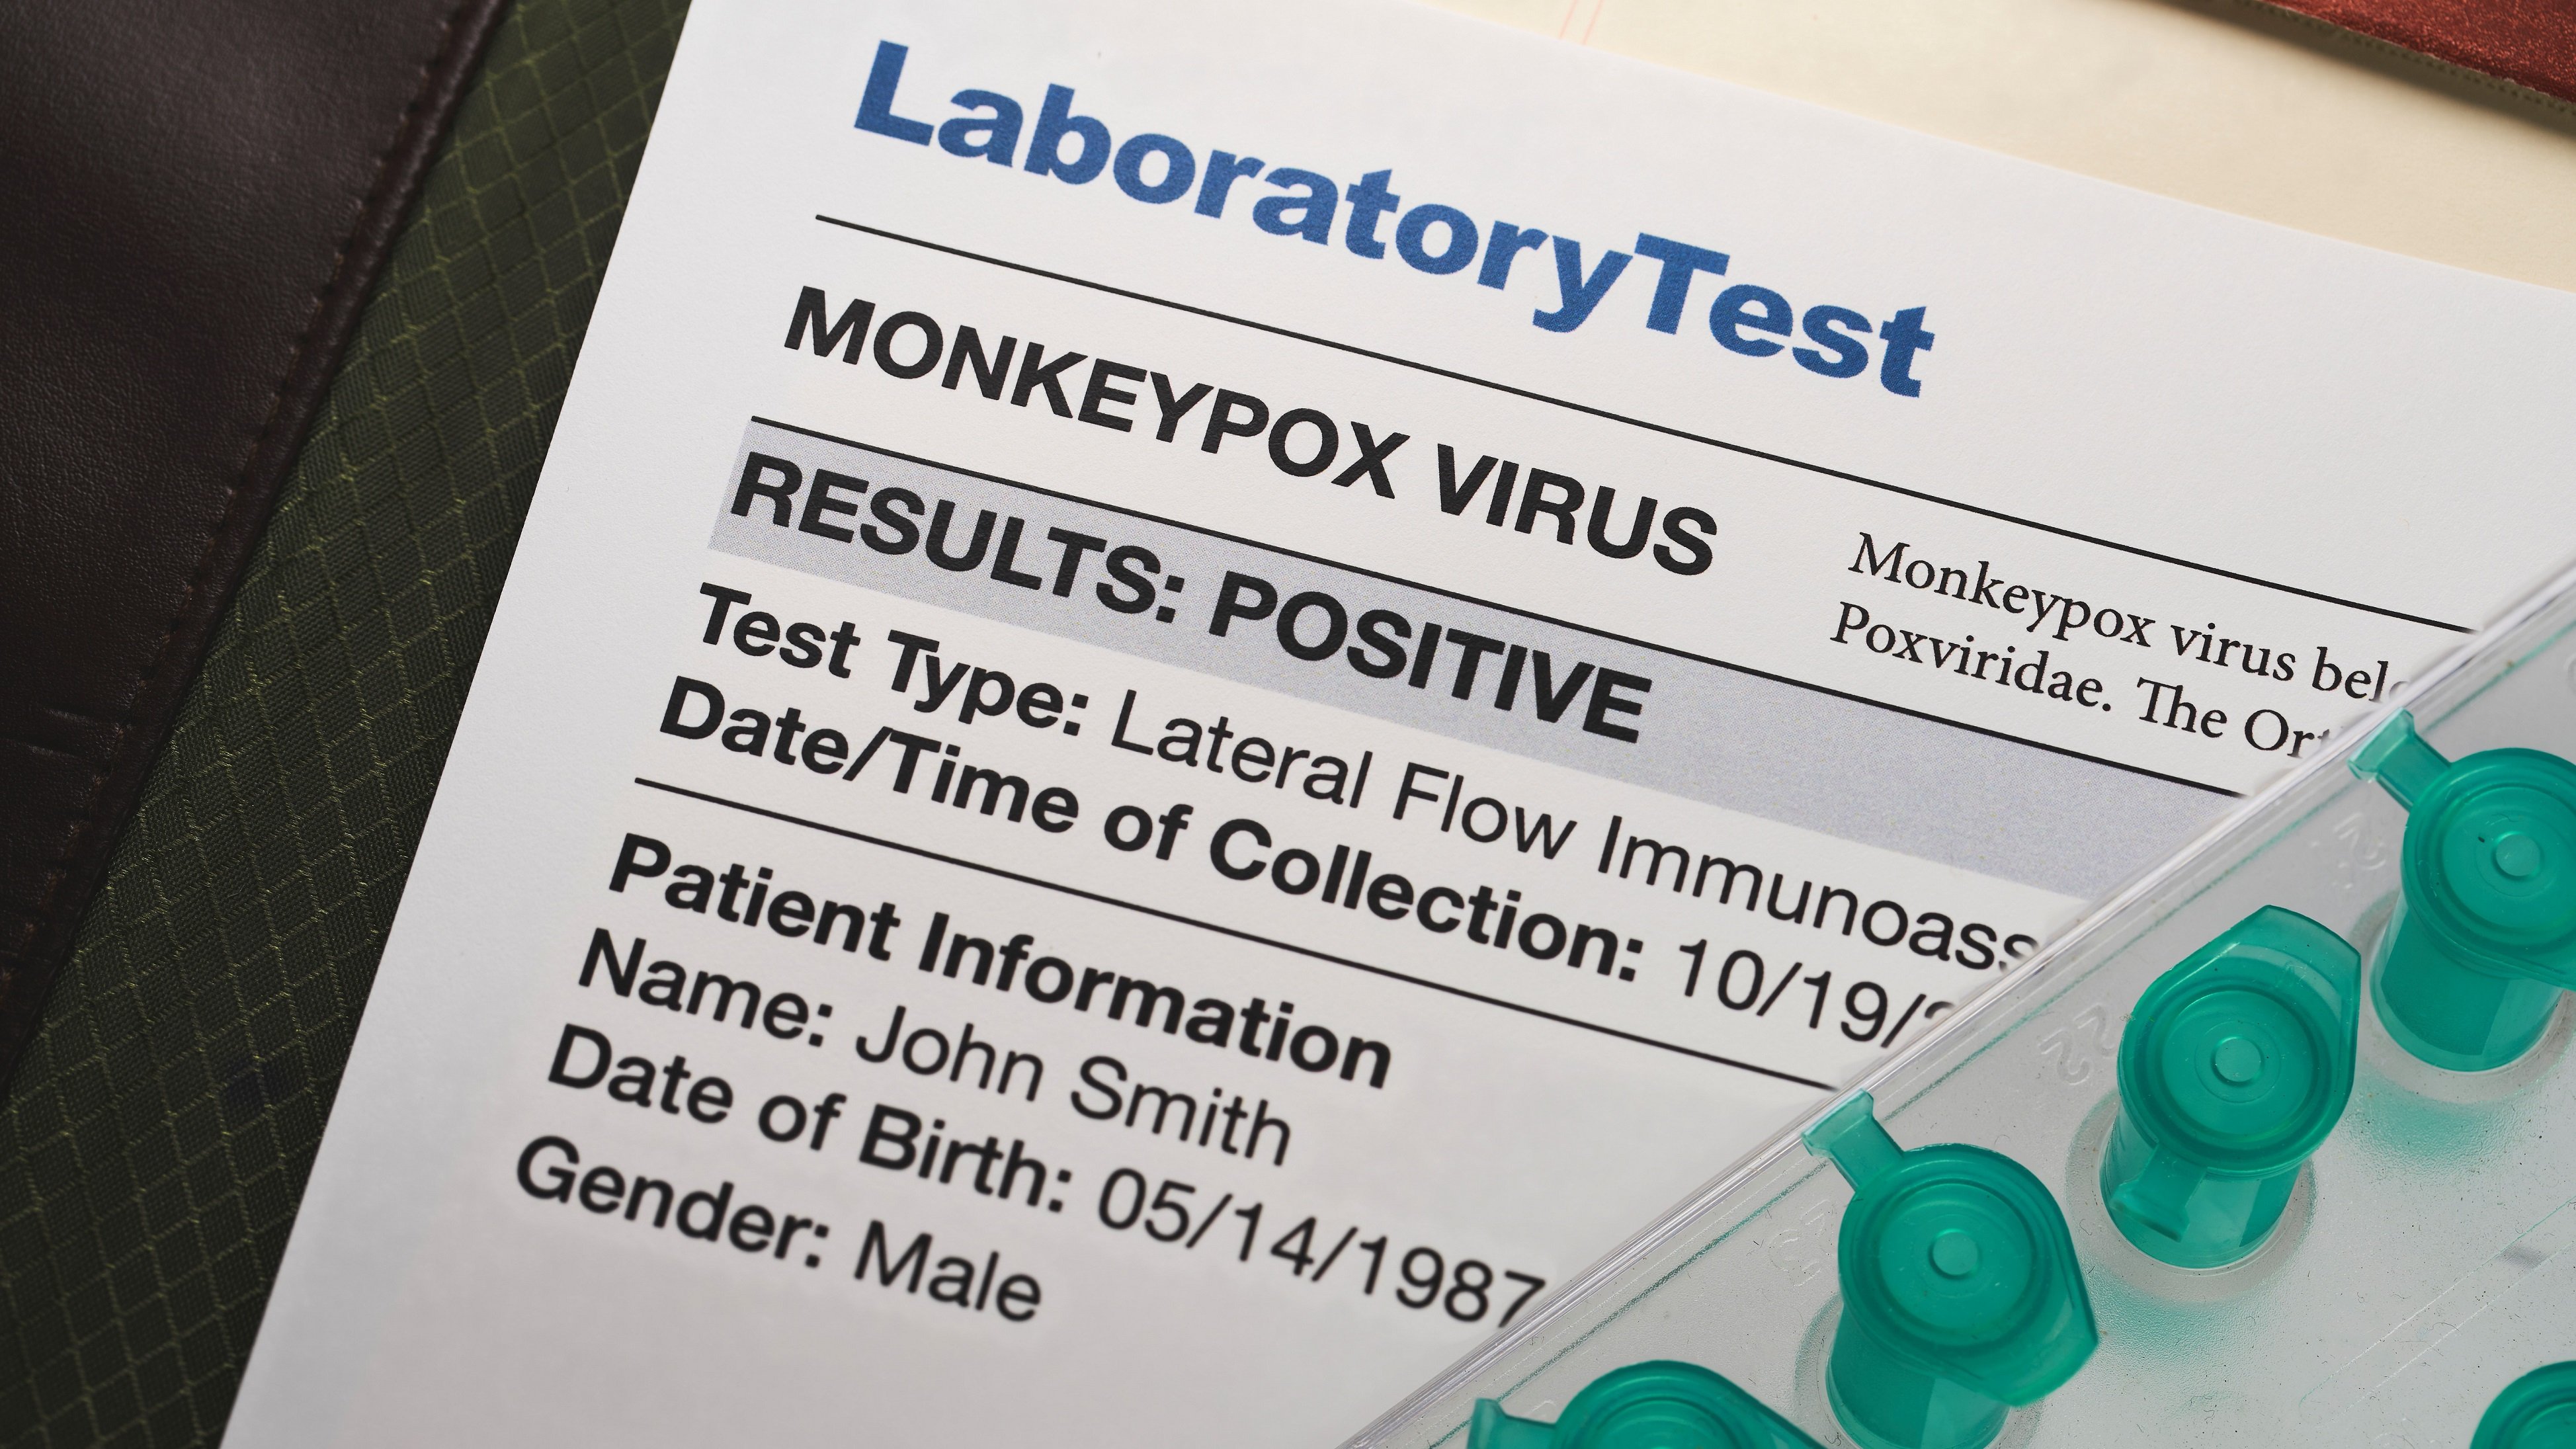 Monkeypox laboratory test test results positive